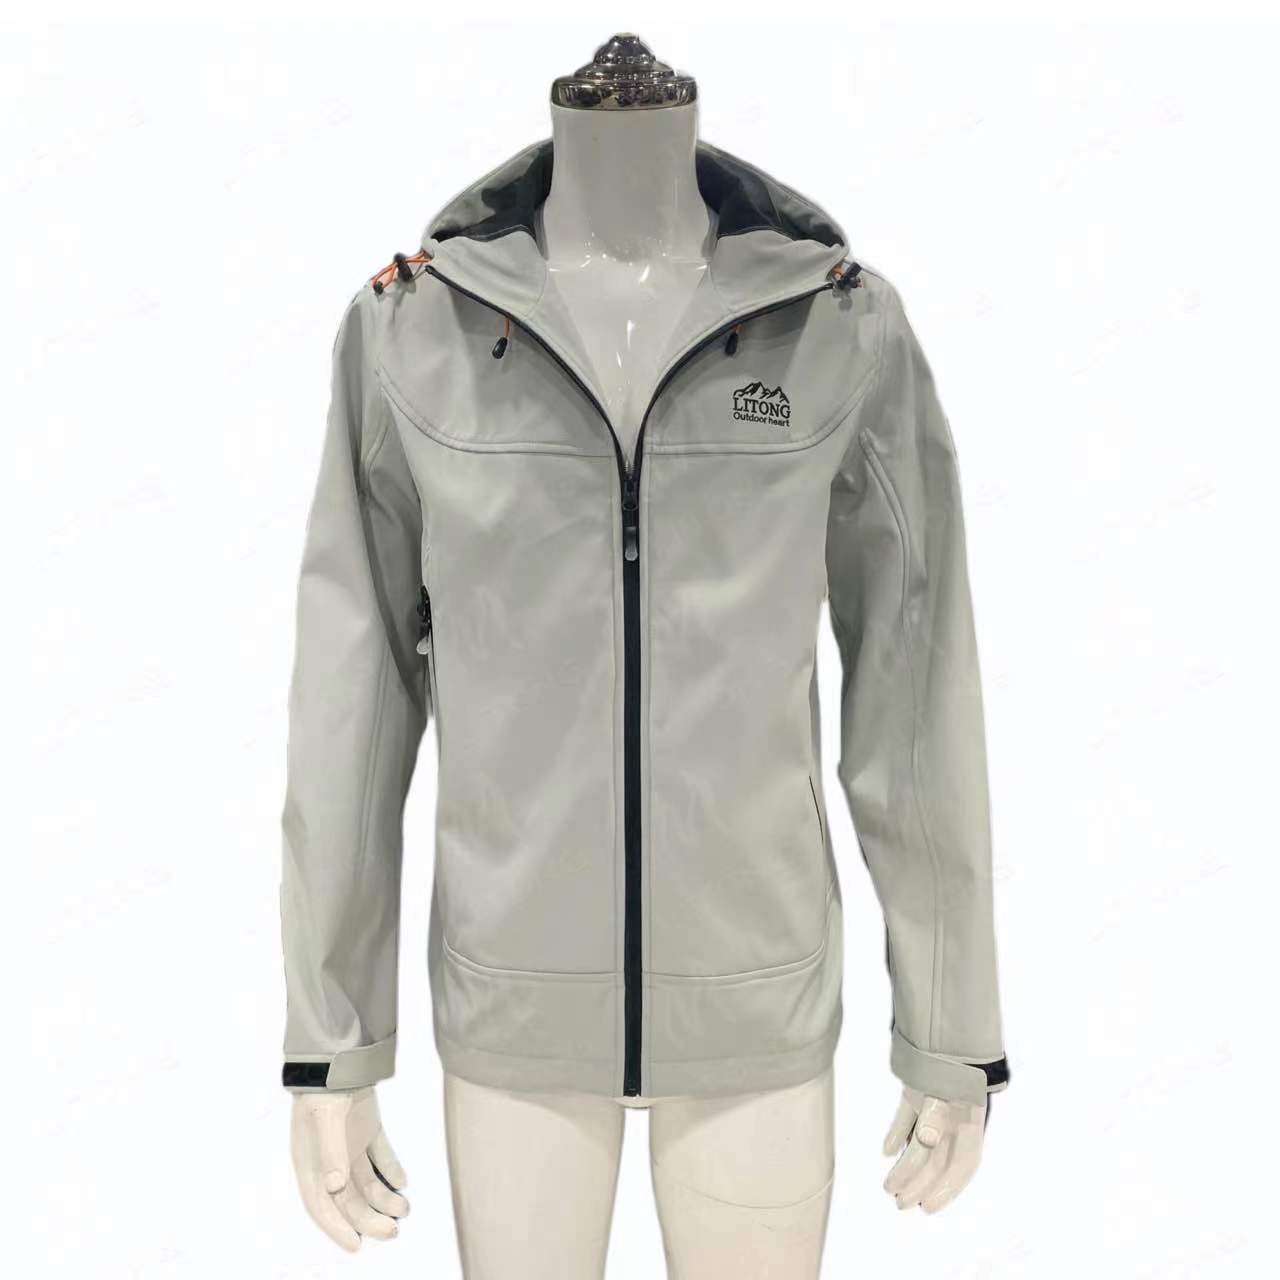 Men's softshell jacket;Working uniform;Hiking uniform